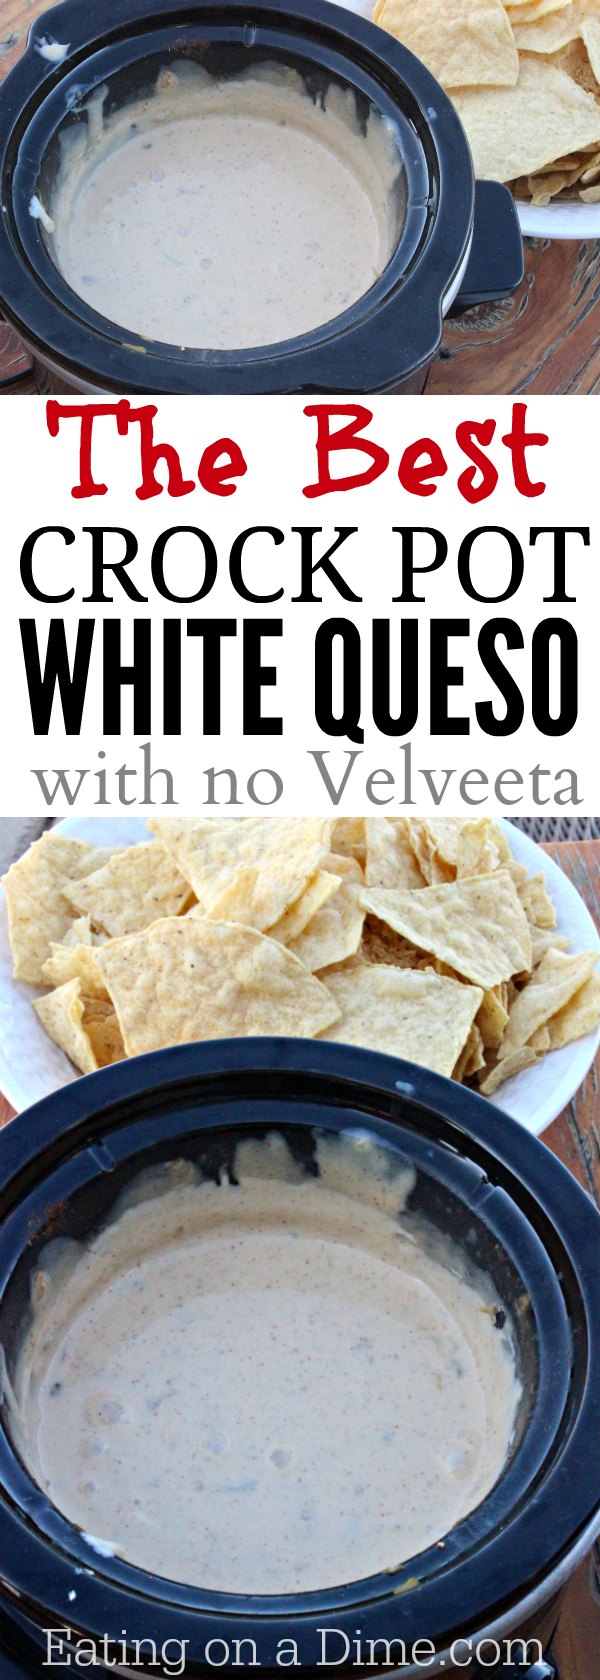 Crock Pot White Cheese Dip Recipe White Queso Dip Recipe,Micro Jobs That Pay Daily